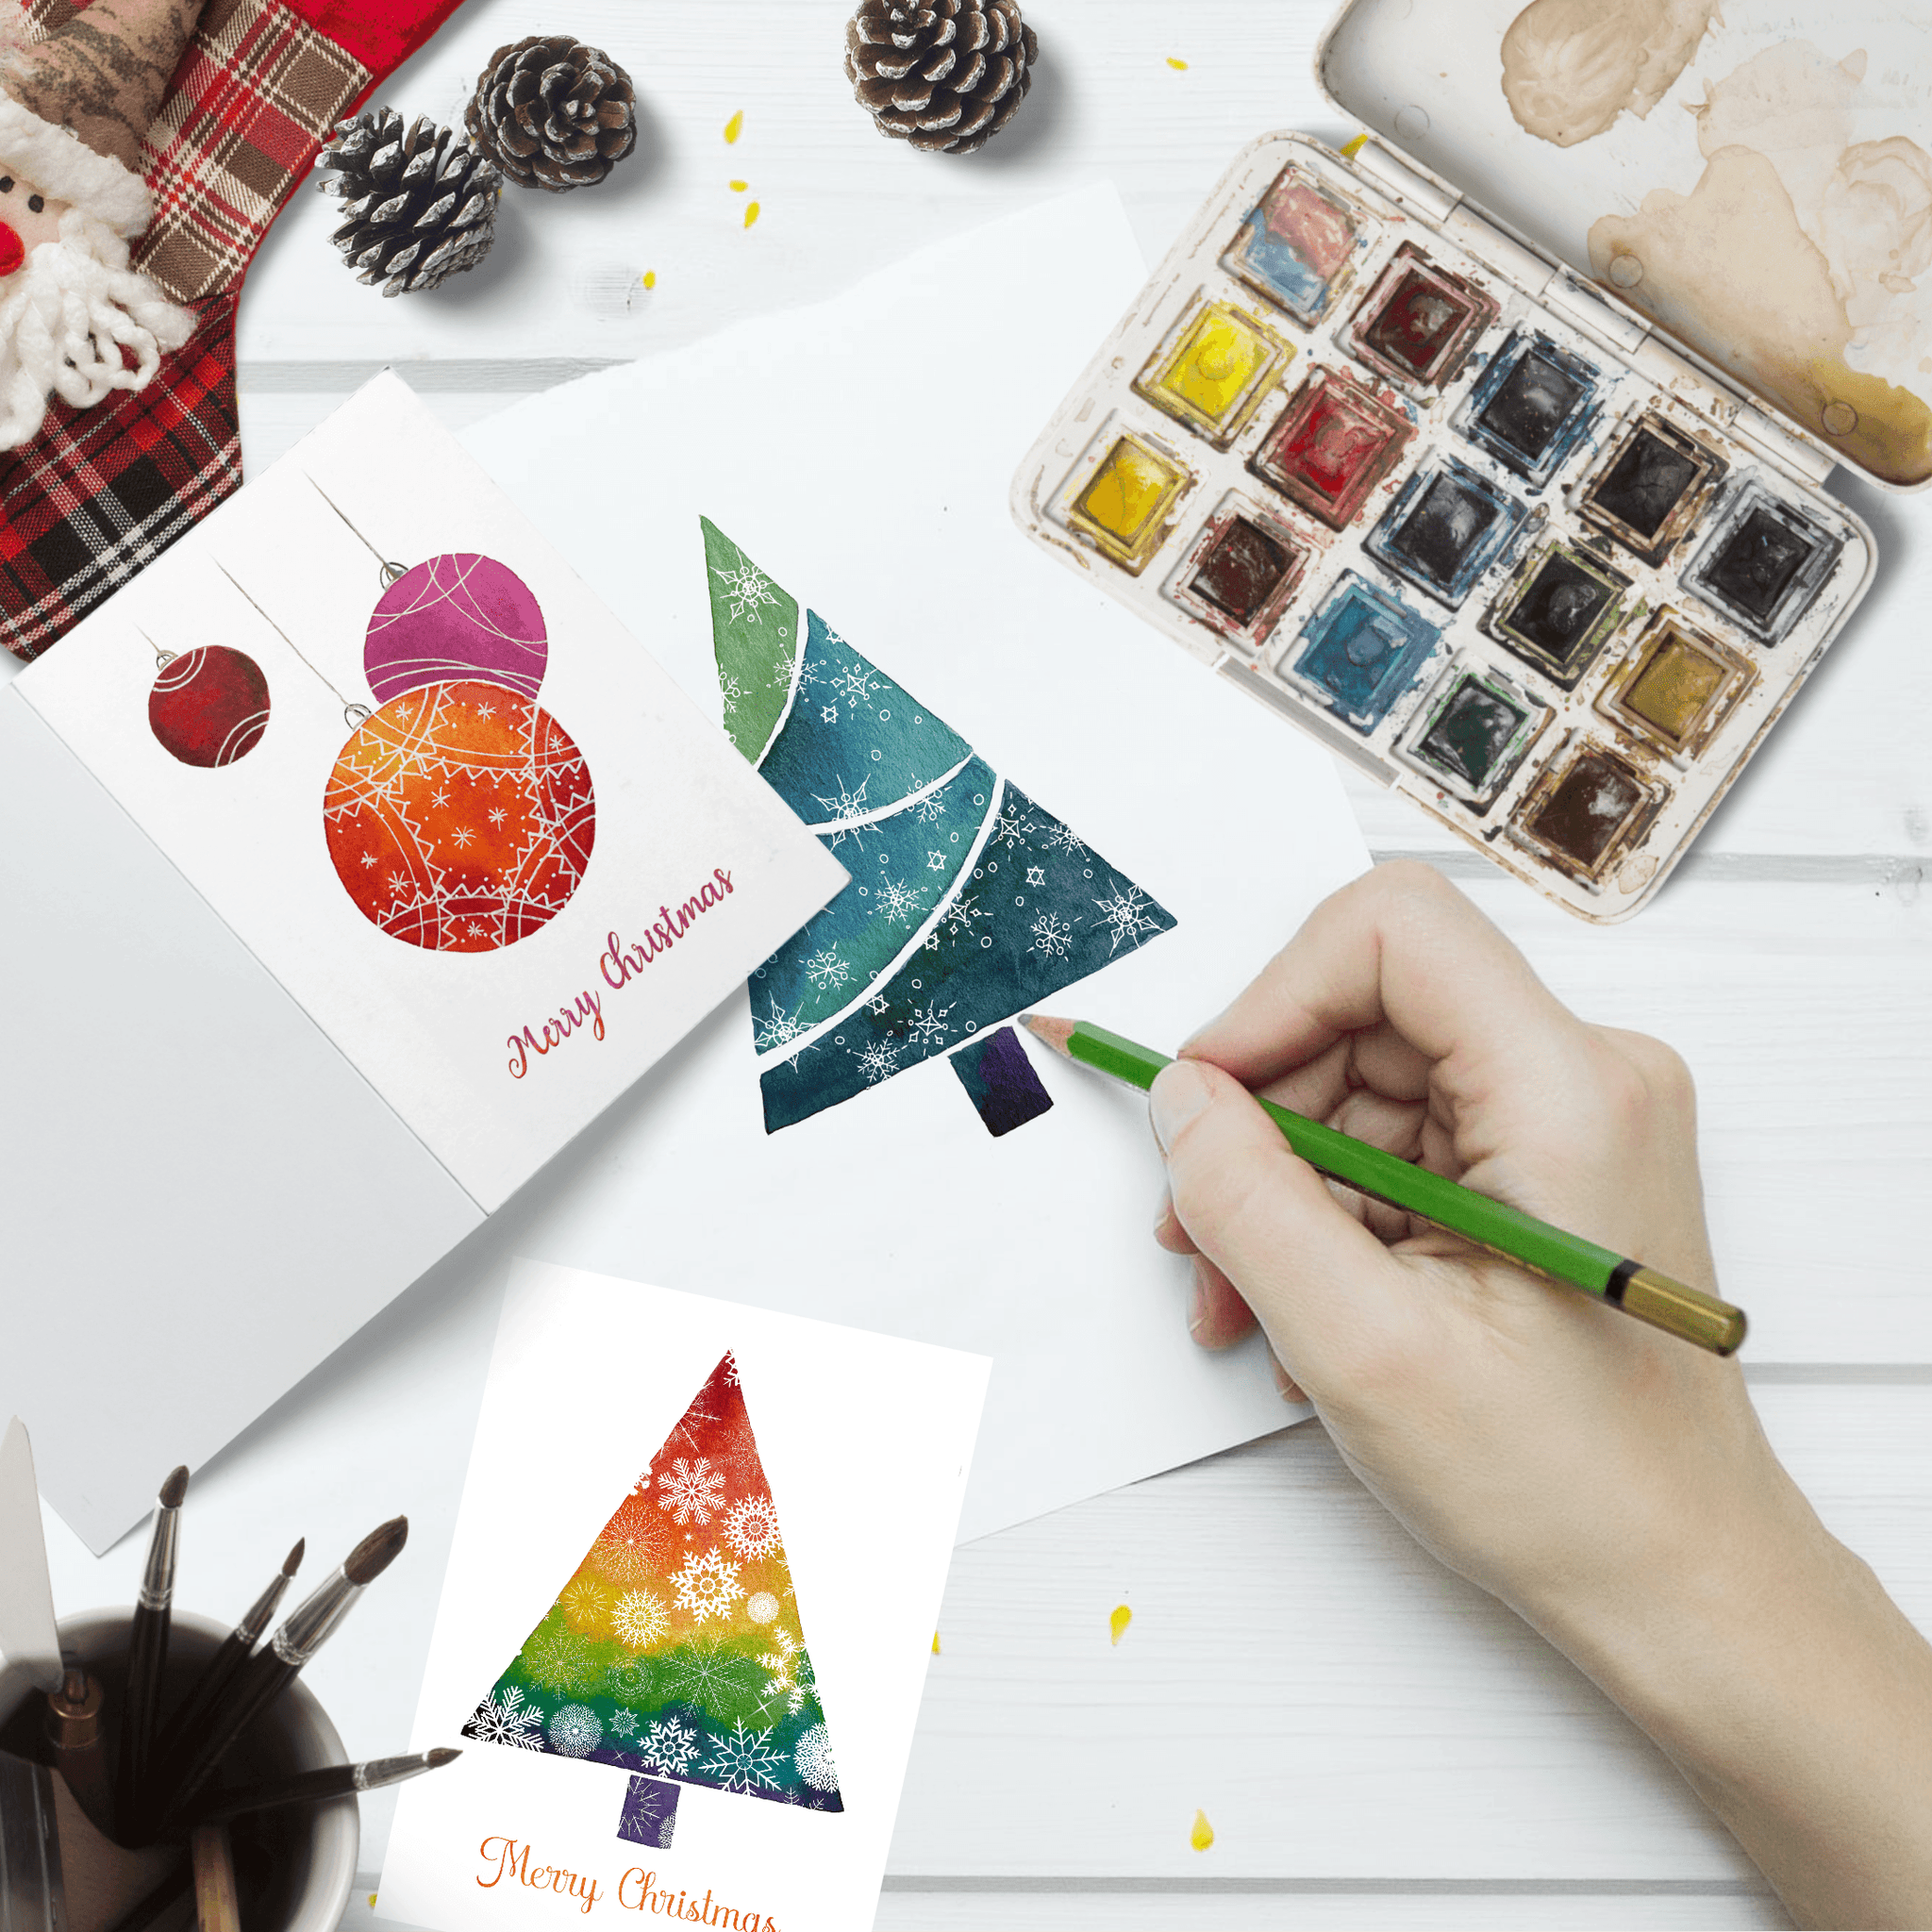 Evergreen Christmas Tree Greeting Card - Lantern Space